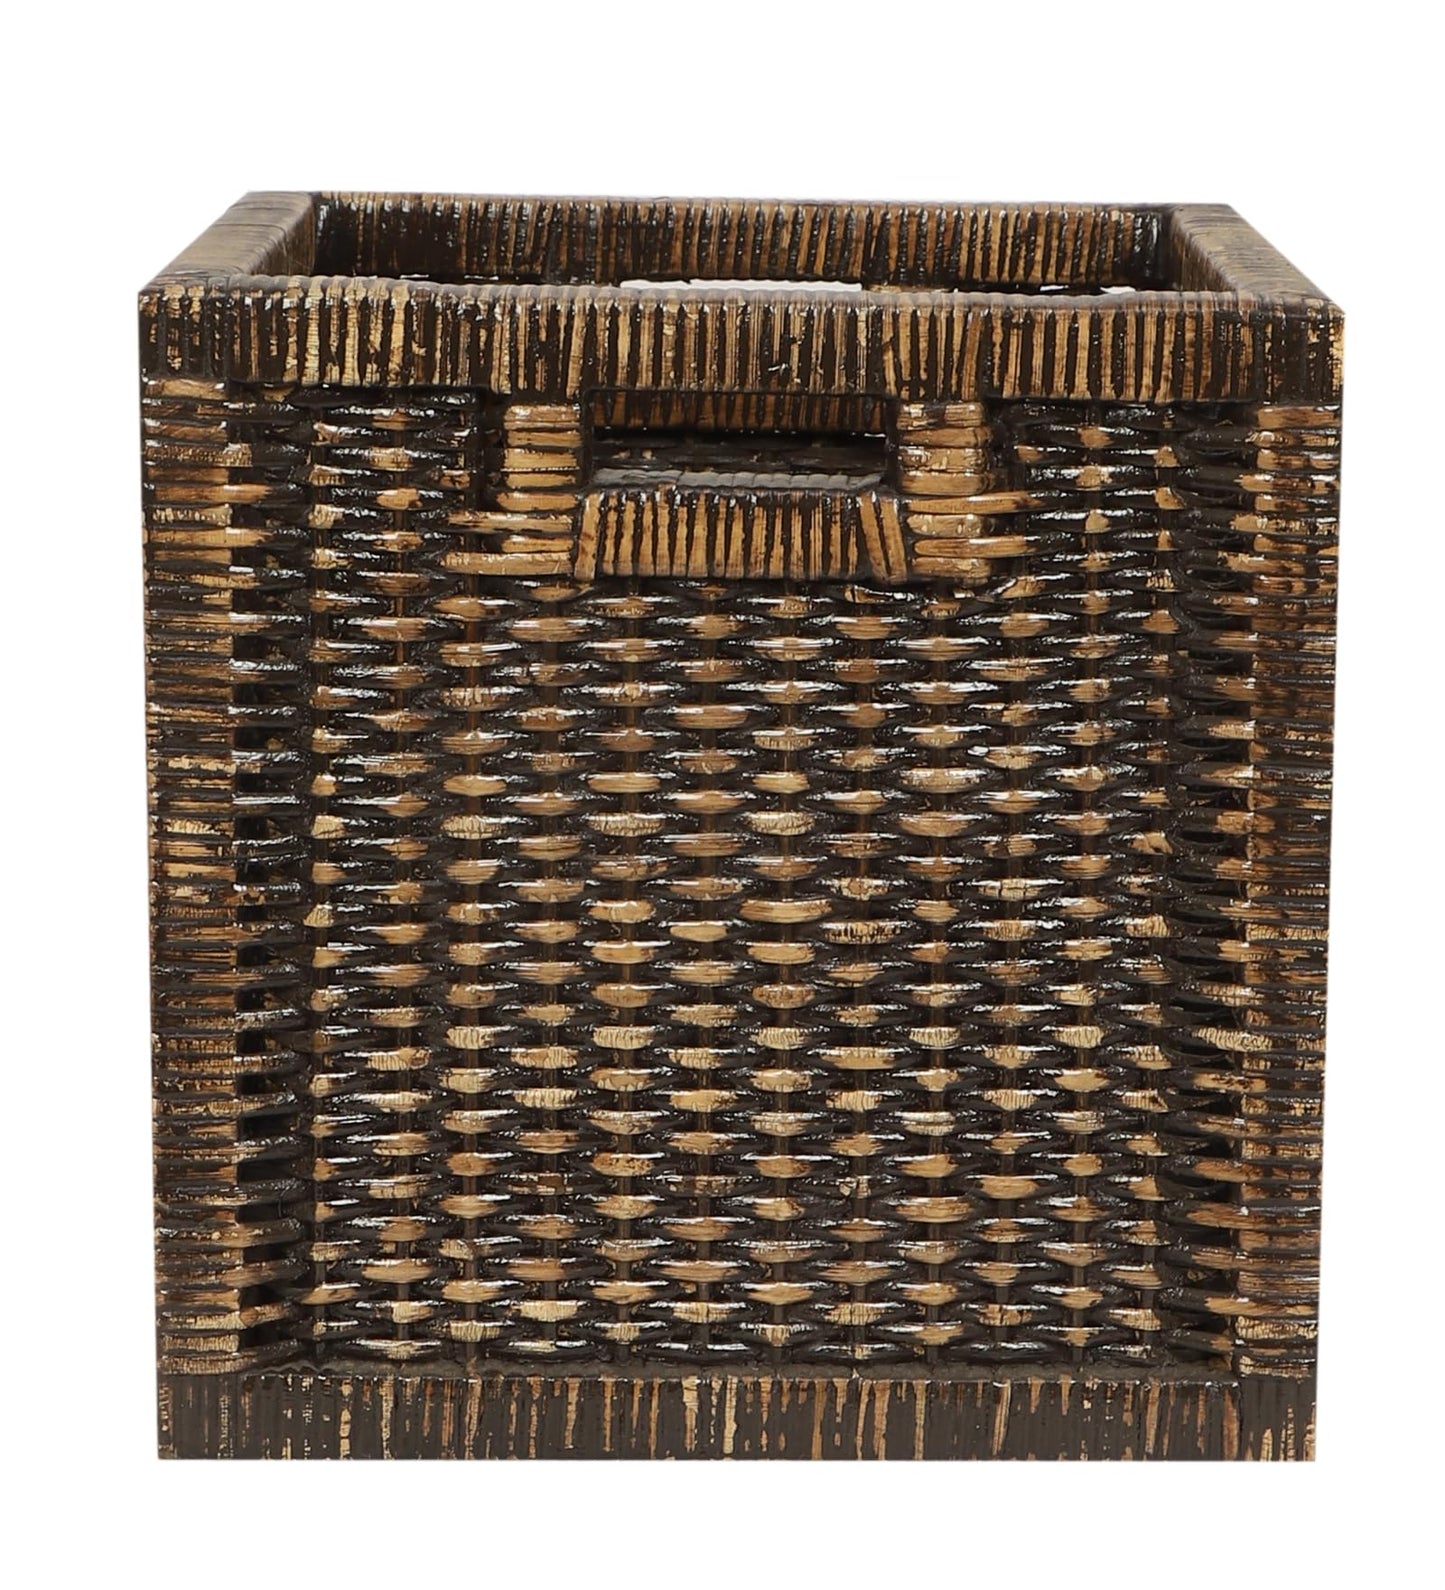 AKWAY Wicker wardrobe basket for storage, cloths, newspapers, photos, toys, plants or other memorabilia, 12.5 x 13.5 x 12.5 Inch, Beige (12.5W x 13.5L x 12.5H, Black)- Akway